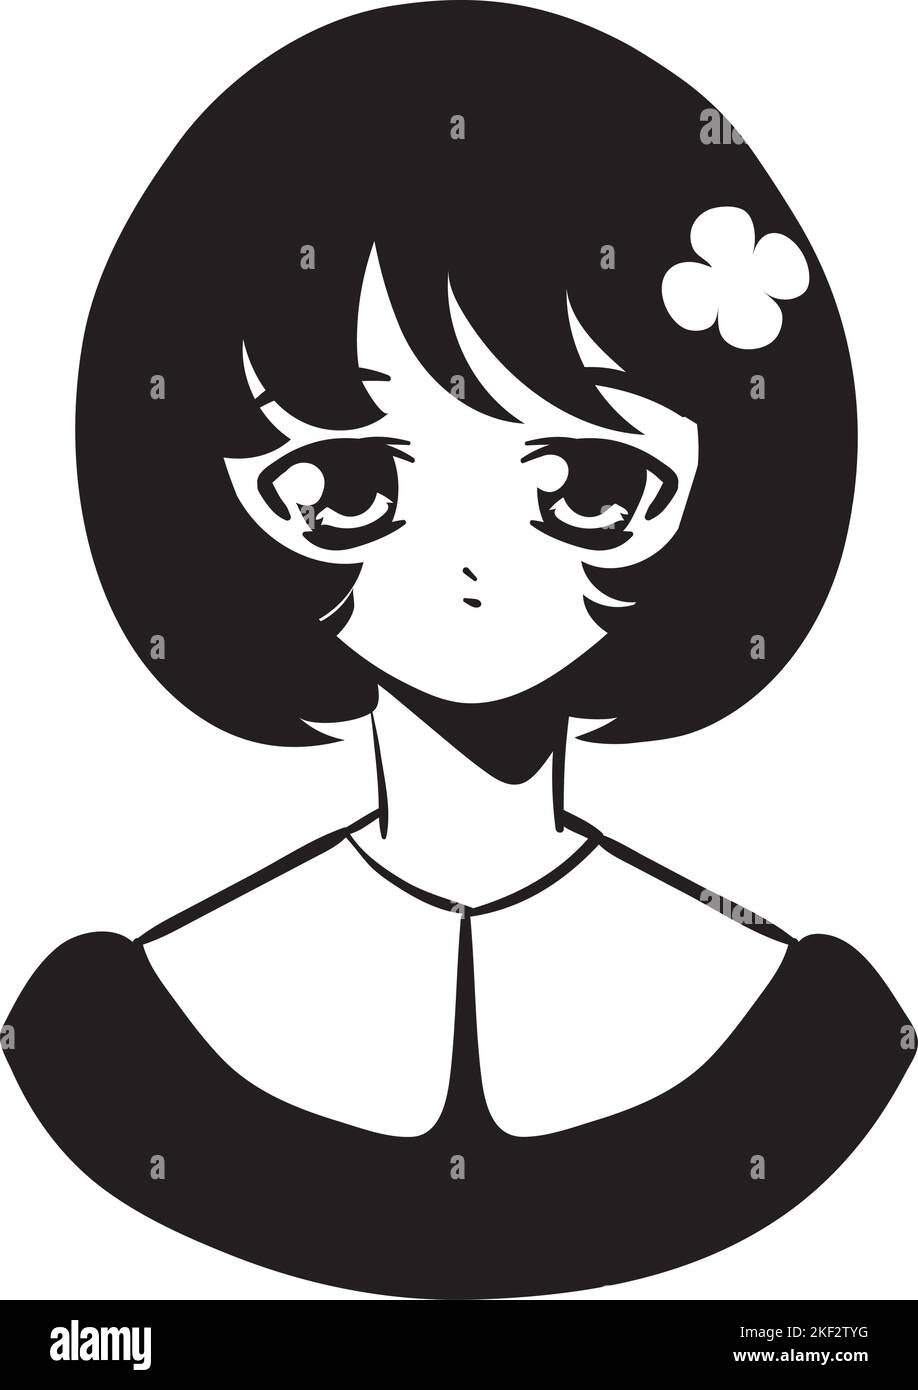 Sad anime Black and White Stock Photos & Images - Alamy